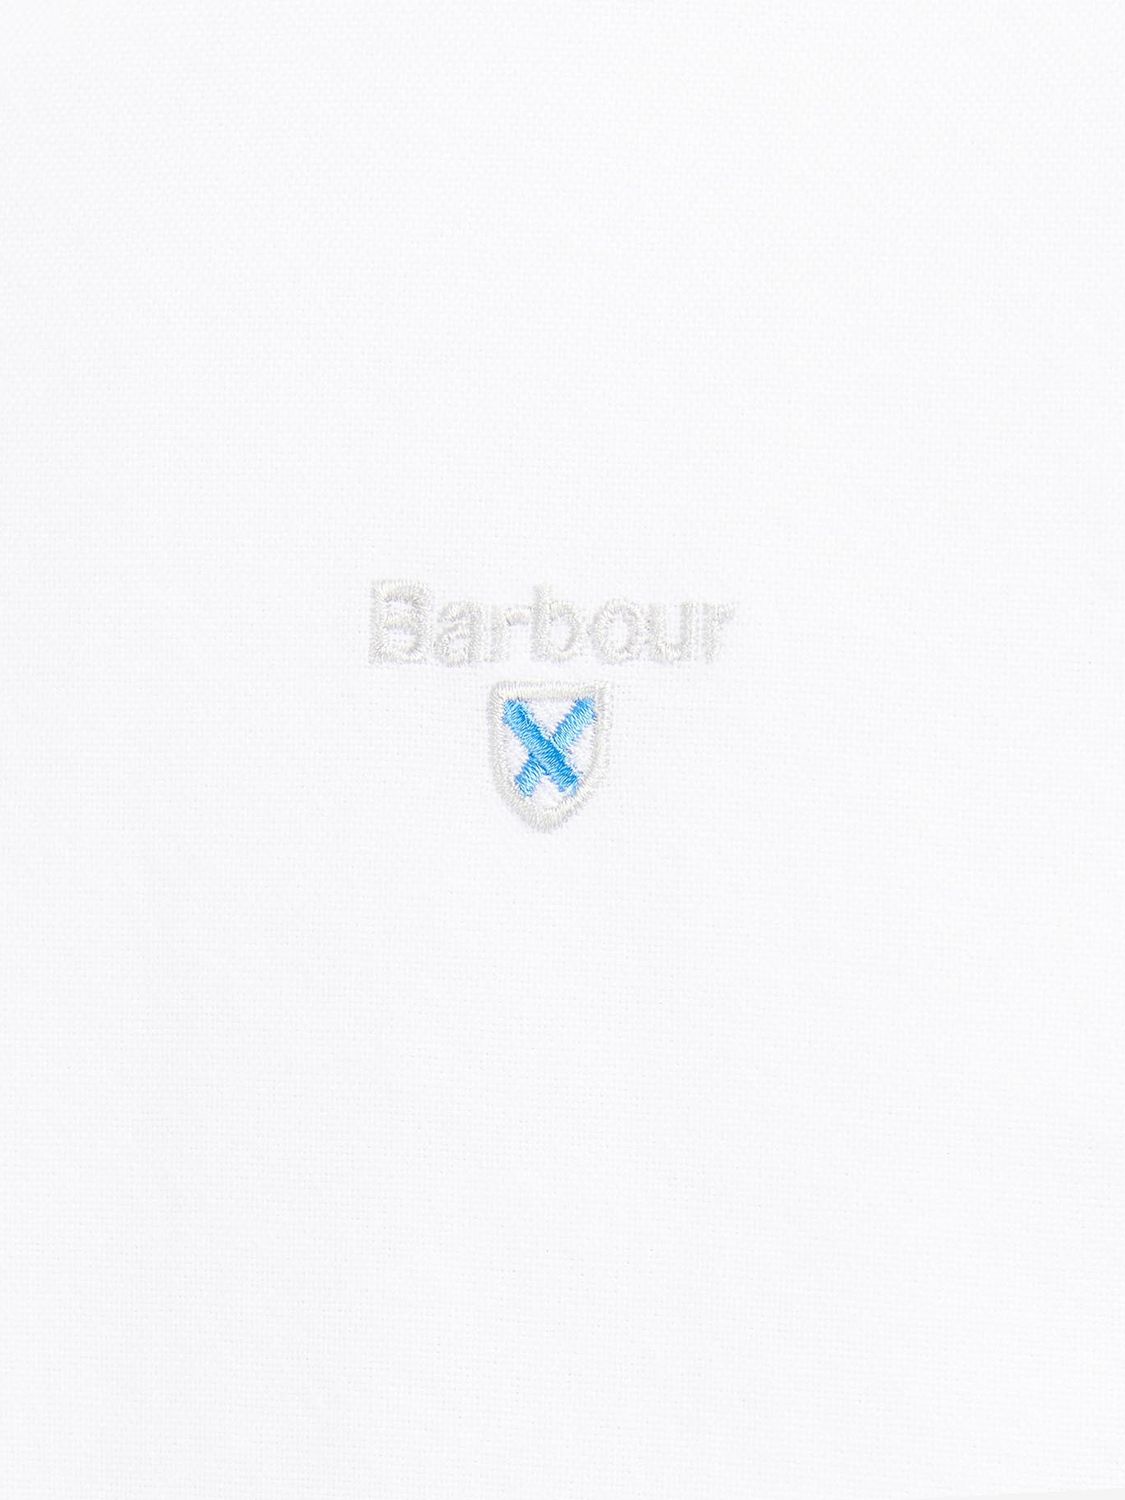 Buy Barbour Oxford Cotton Short Sleeve Shirt Online at johnlewis.com